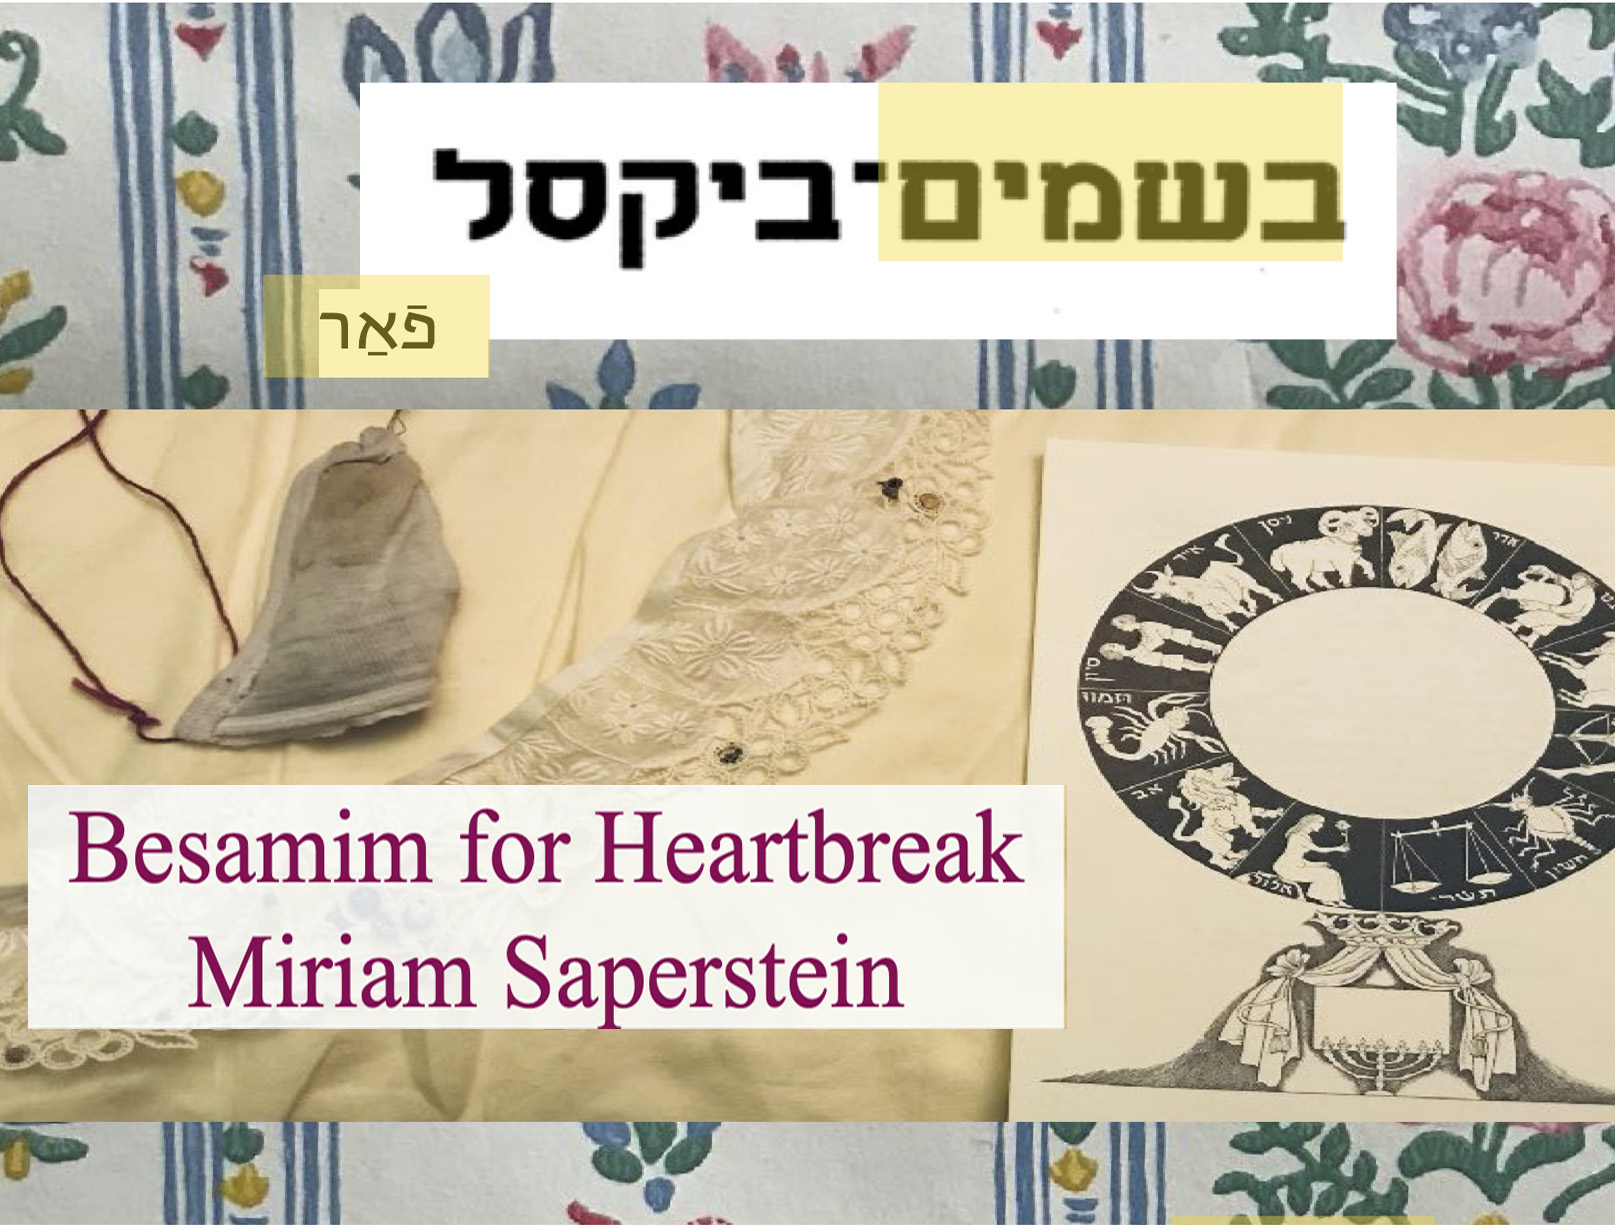 Besamim for Heartbreak cover cropped